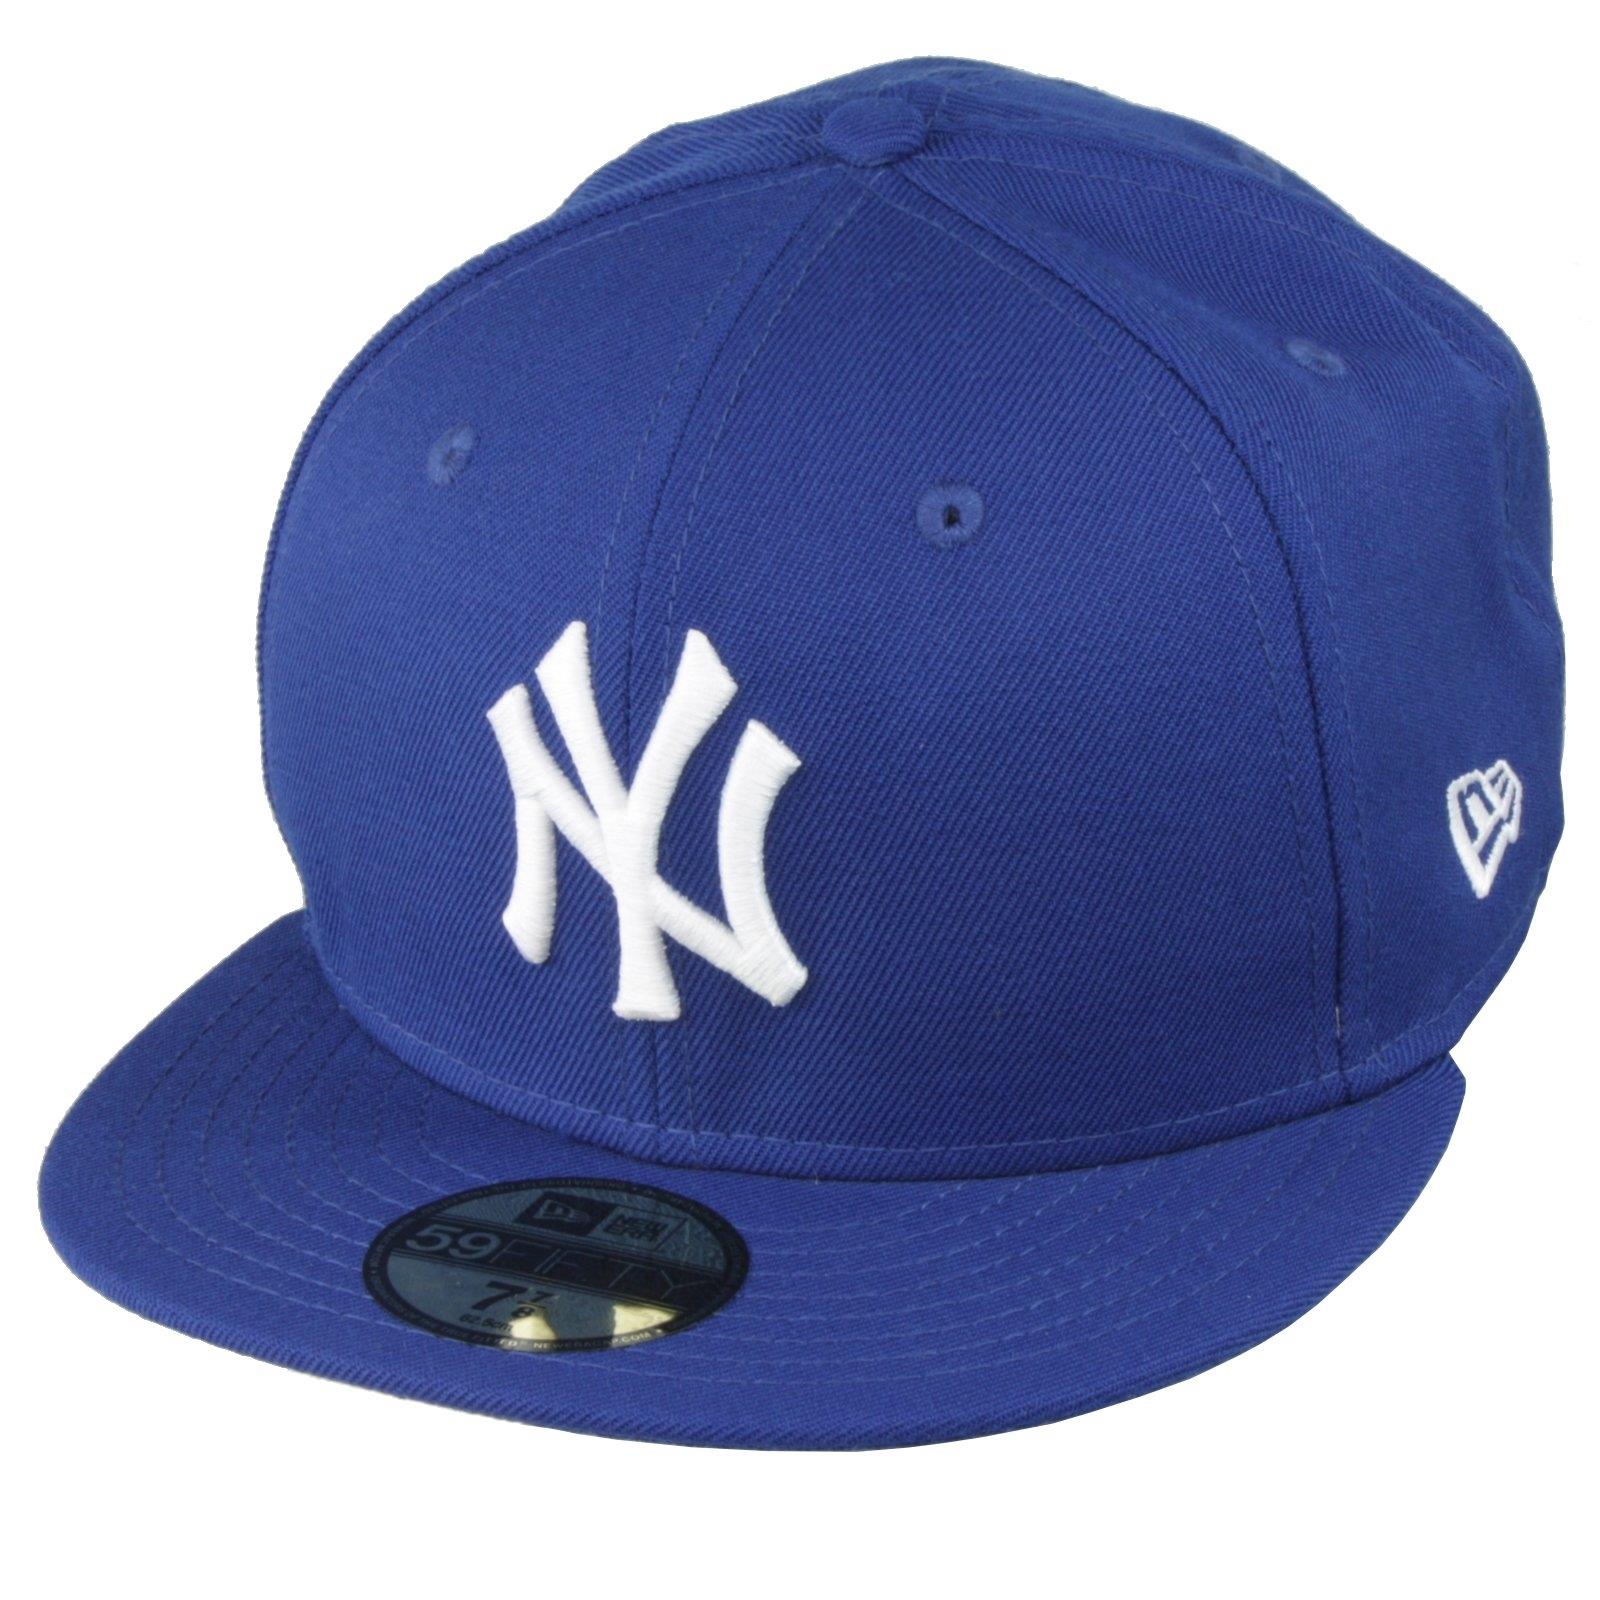 Corridor NYC Baumwolle KAPPE NEW YORK in Blau für Herren Caps & Mützen Herren Accessoires Hüte 